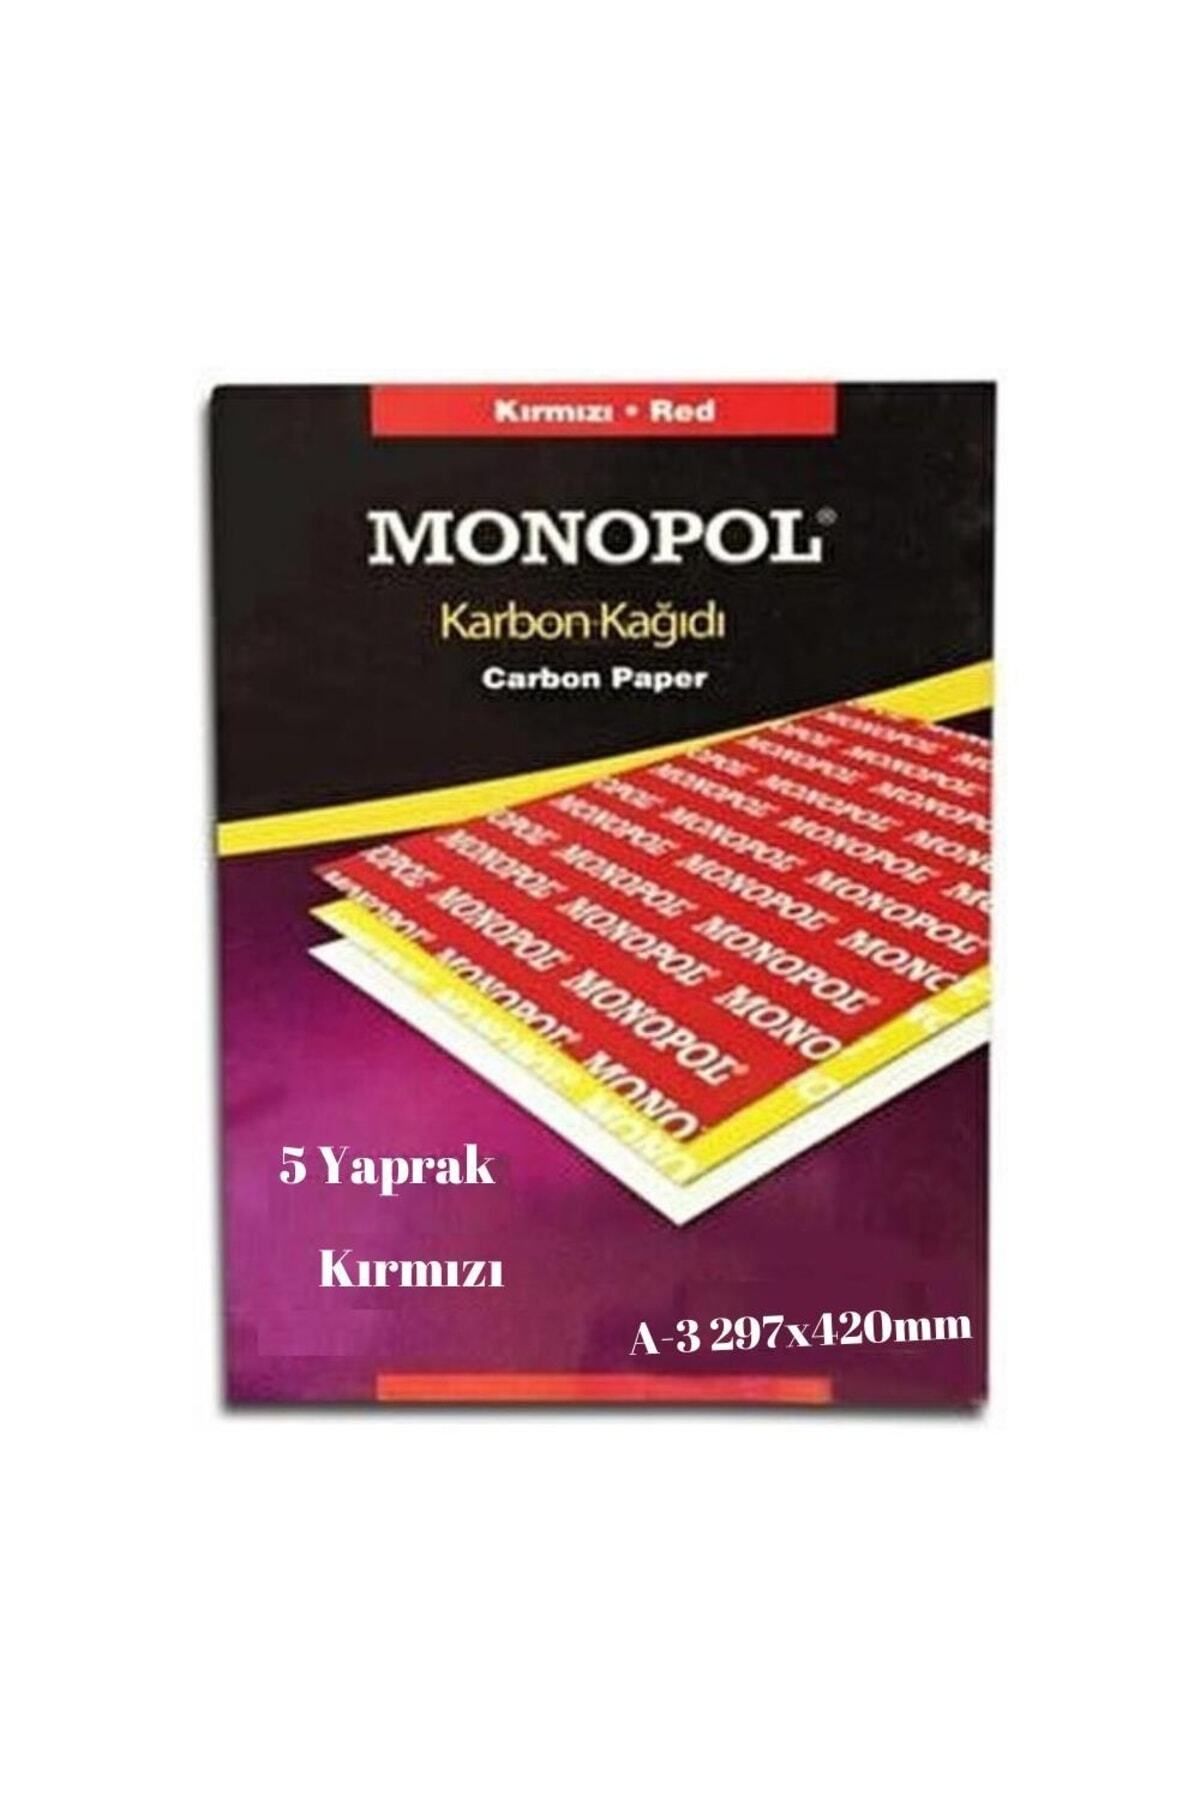 Monopol Karbon Kağıdı A3 5 Adet 1 Paket Karbon Kağıdı Renk Seçeneği A-3 5 Adet 1 Paket